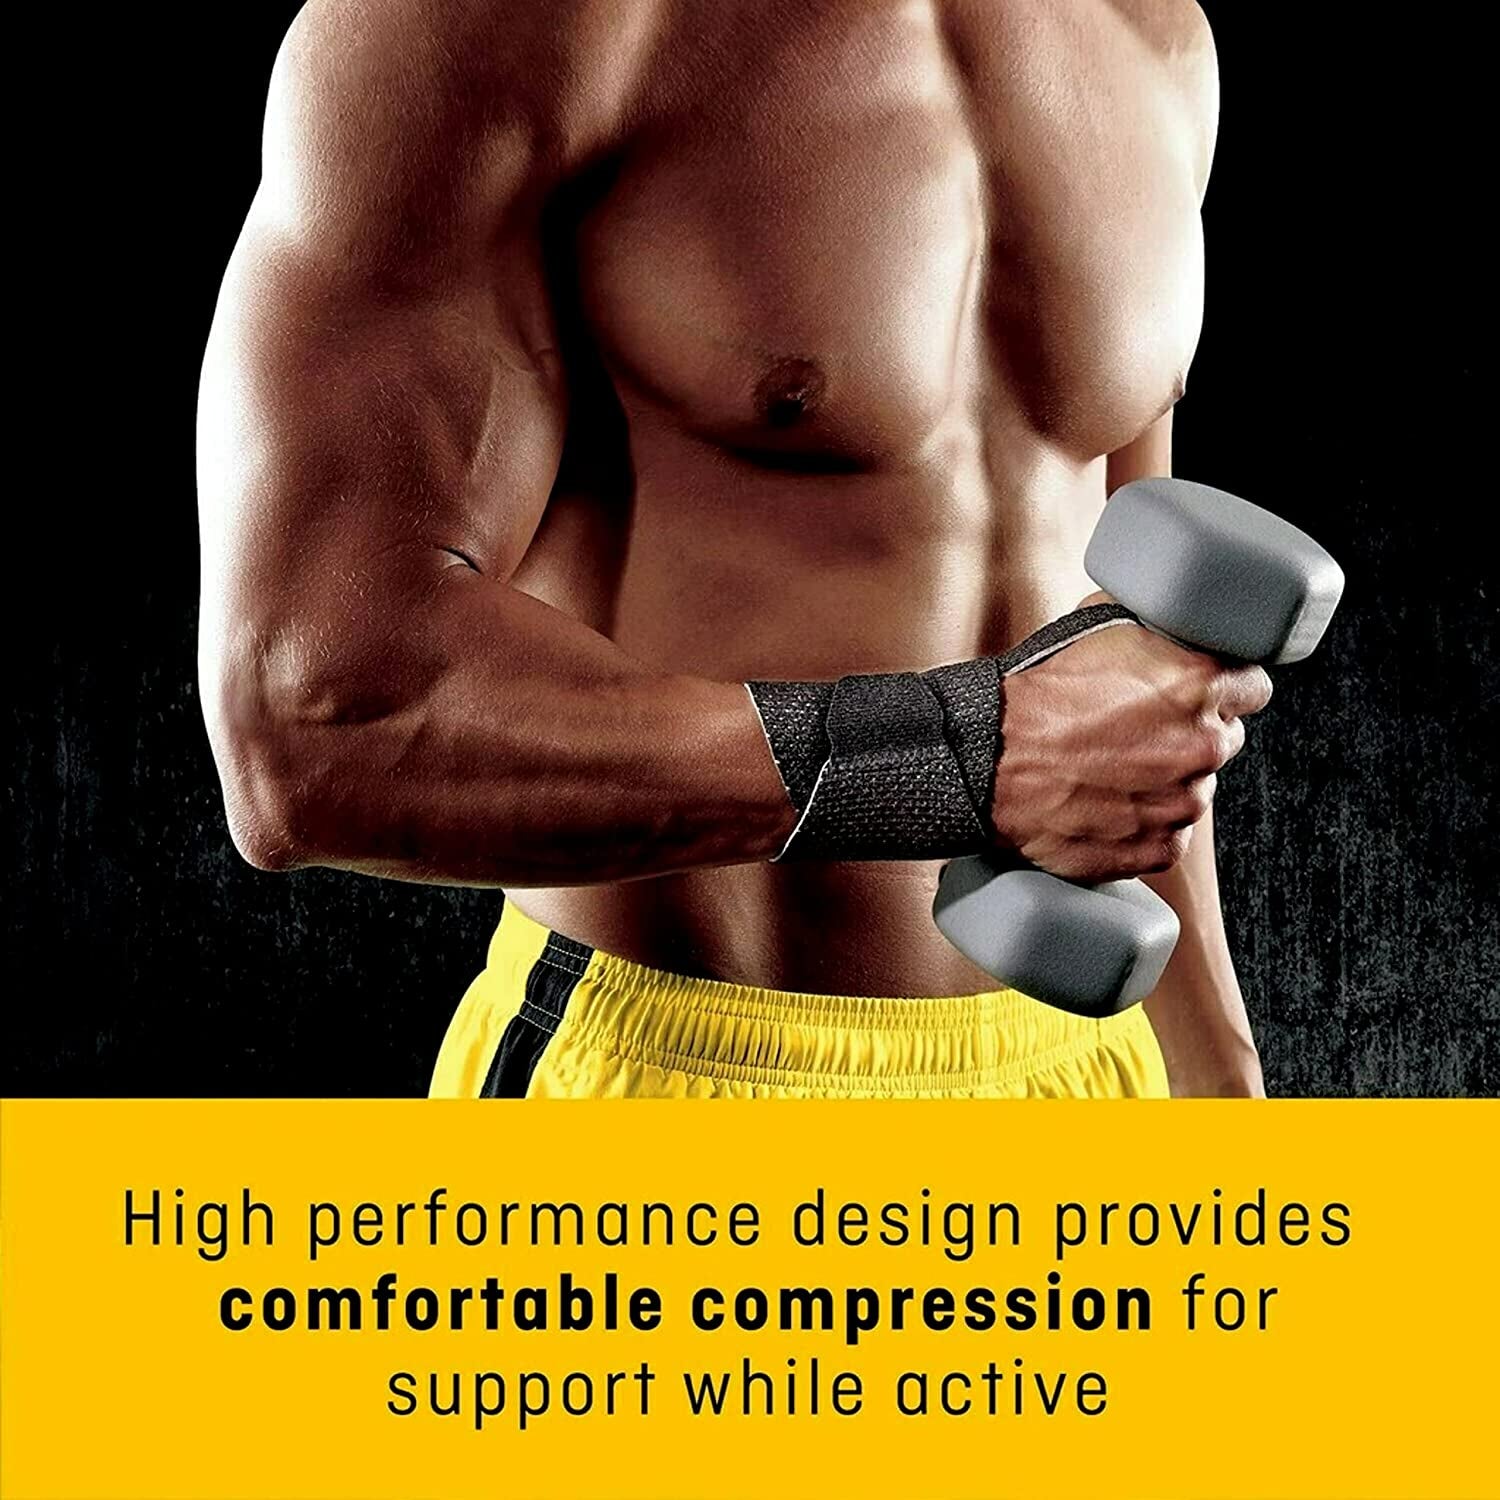 FUTURO Performance Comfort Wrist Support, Adjustable